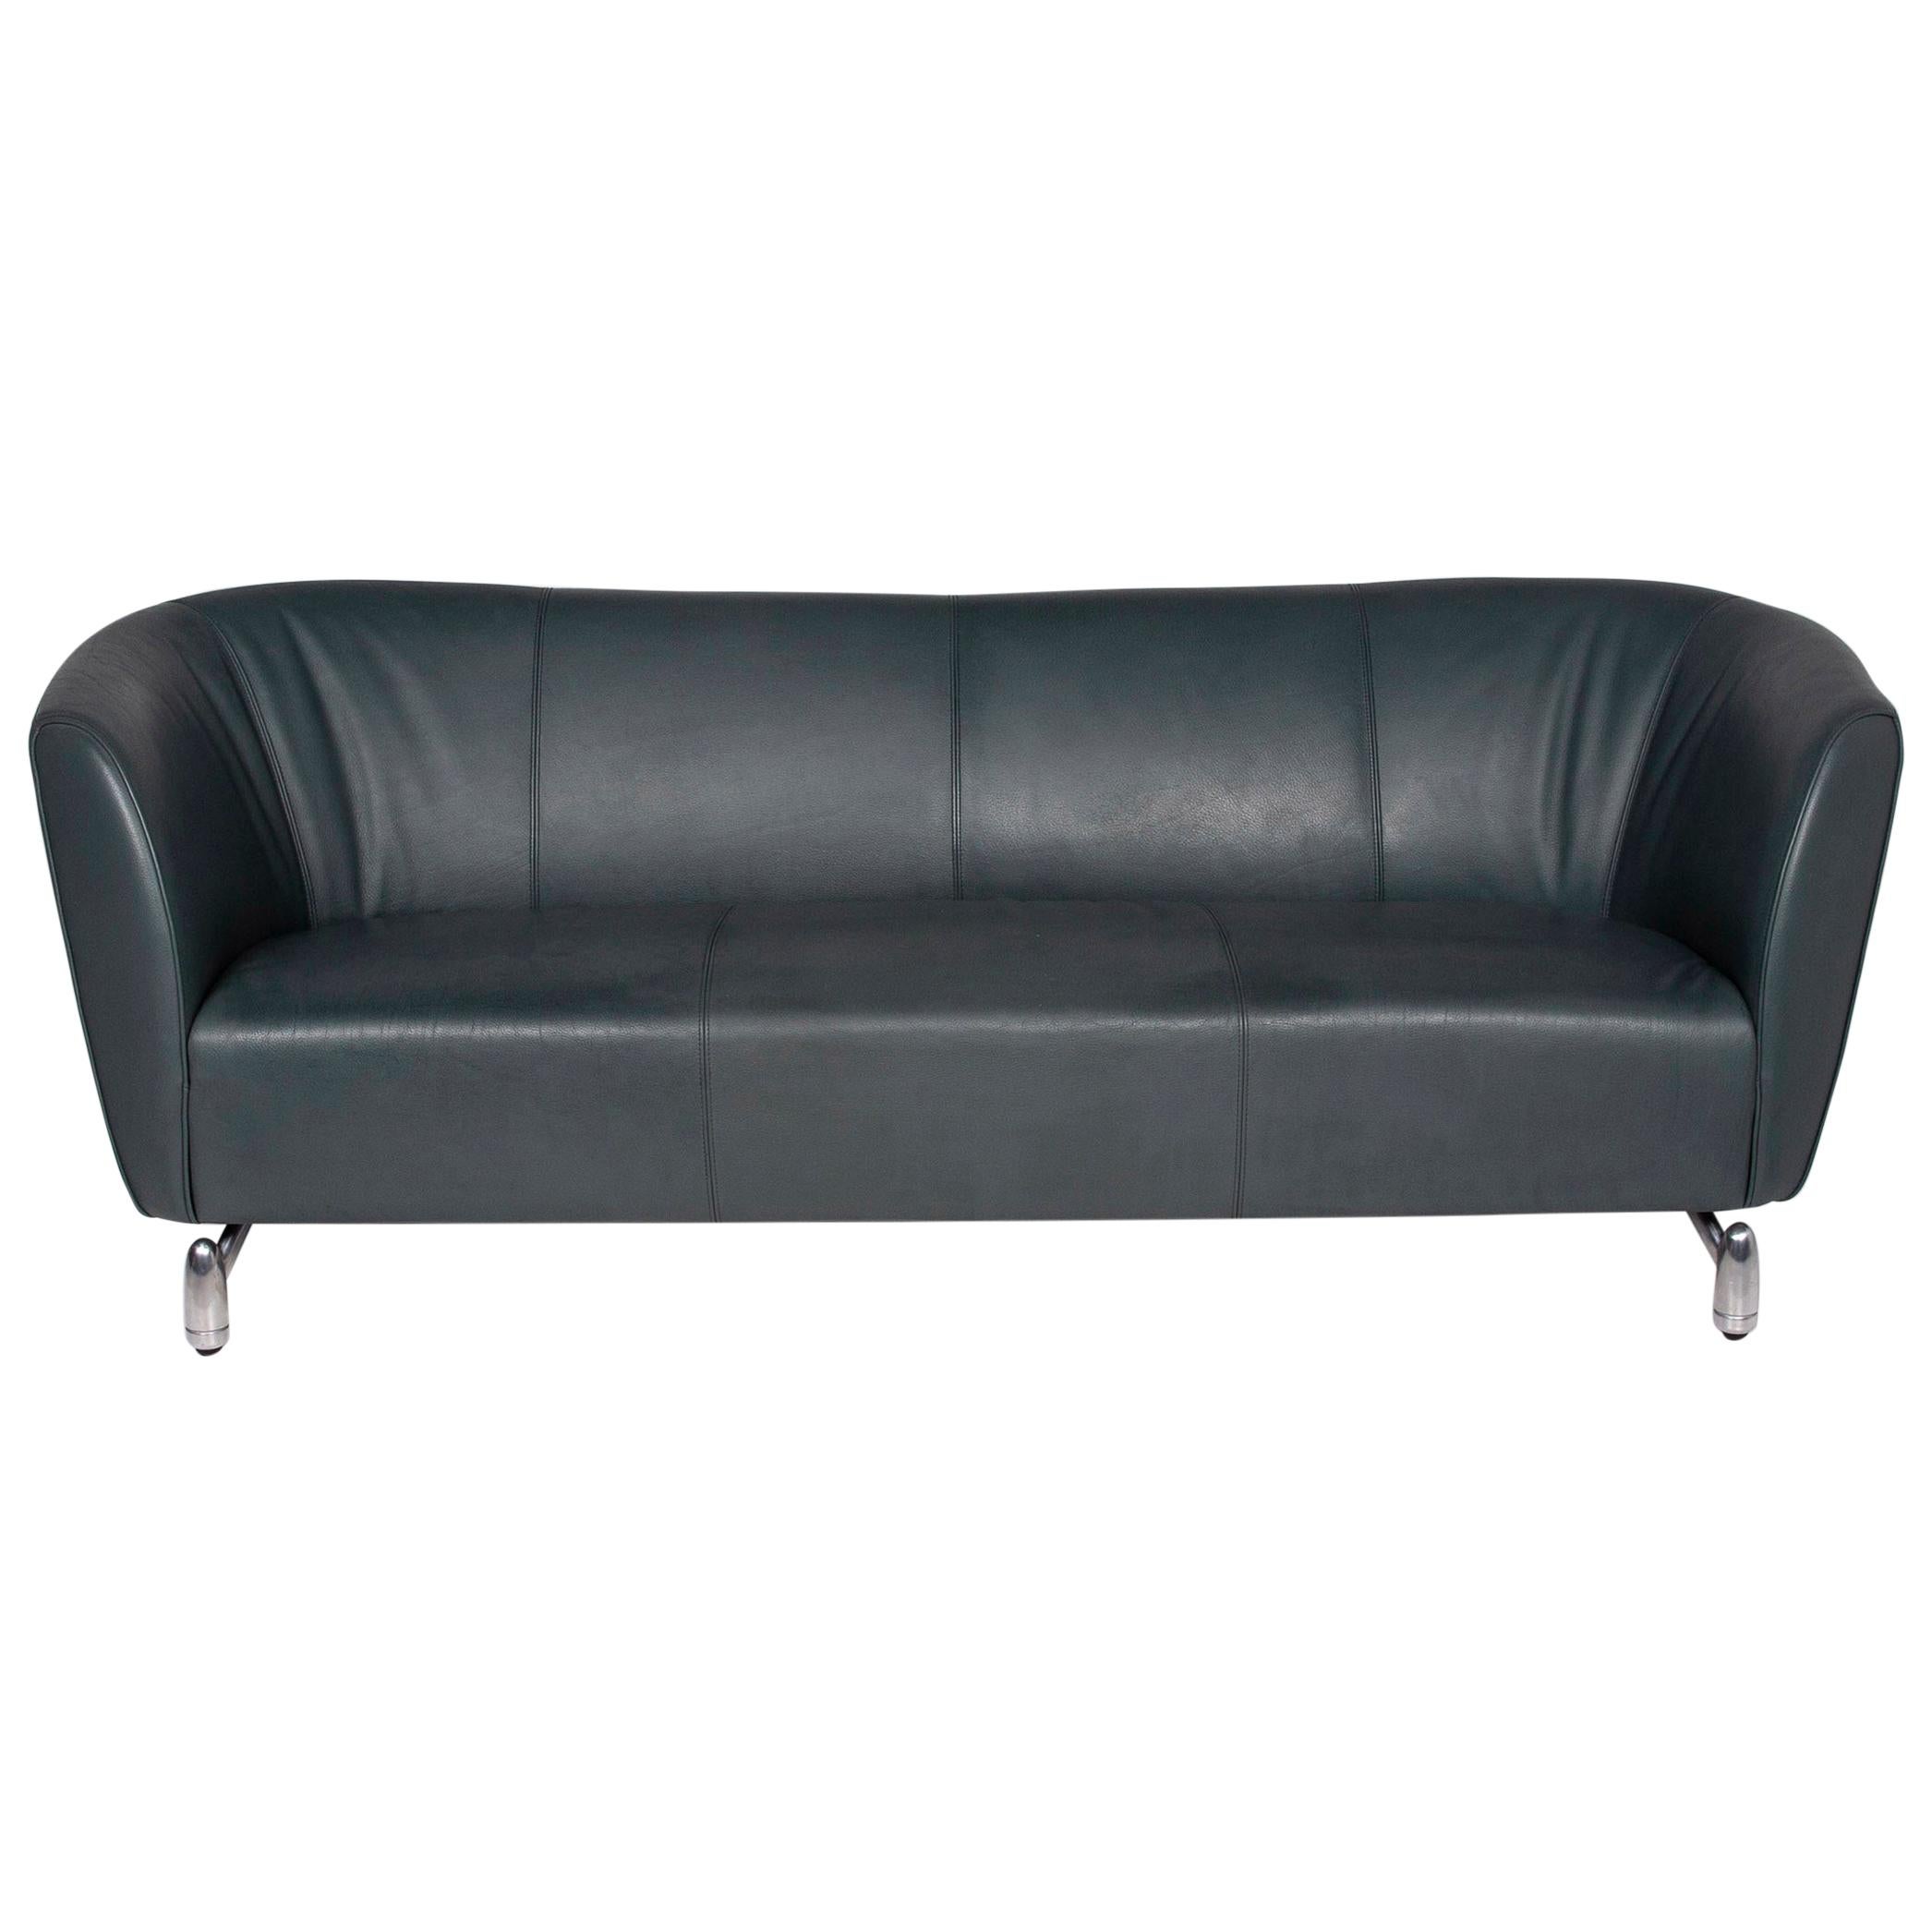 Leolux Pupilla Leather Sofa Green Three-Seat Couch